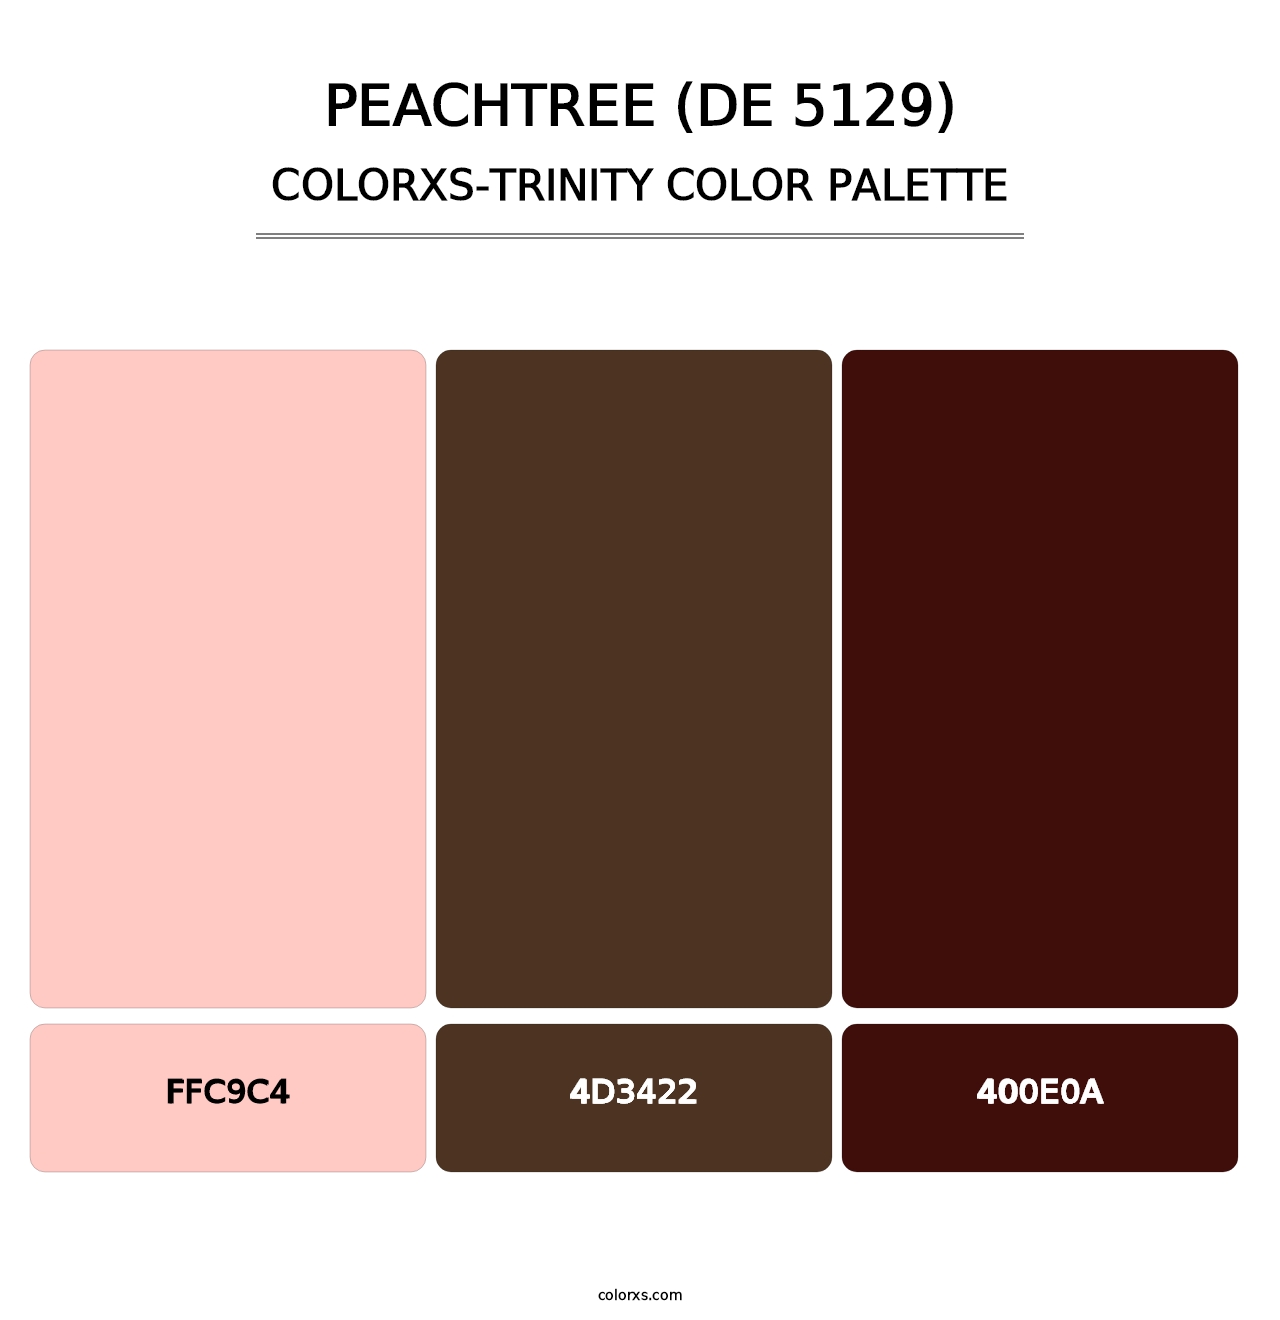 Peachtree (DE 5129) - Colorxs Trinity Palette